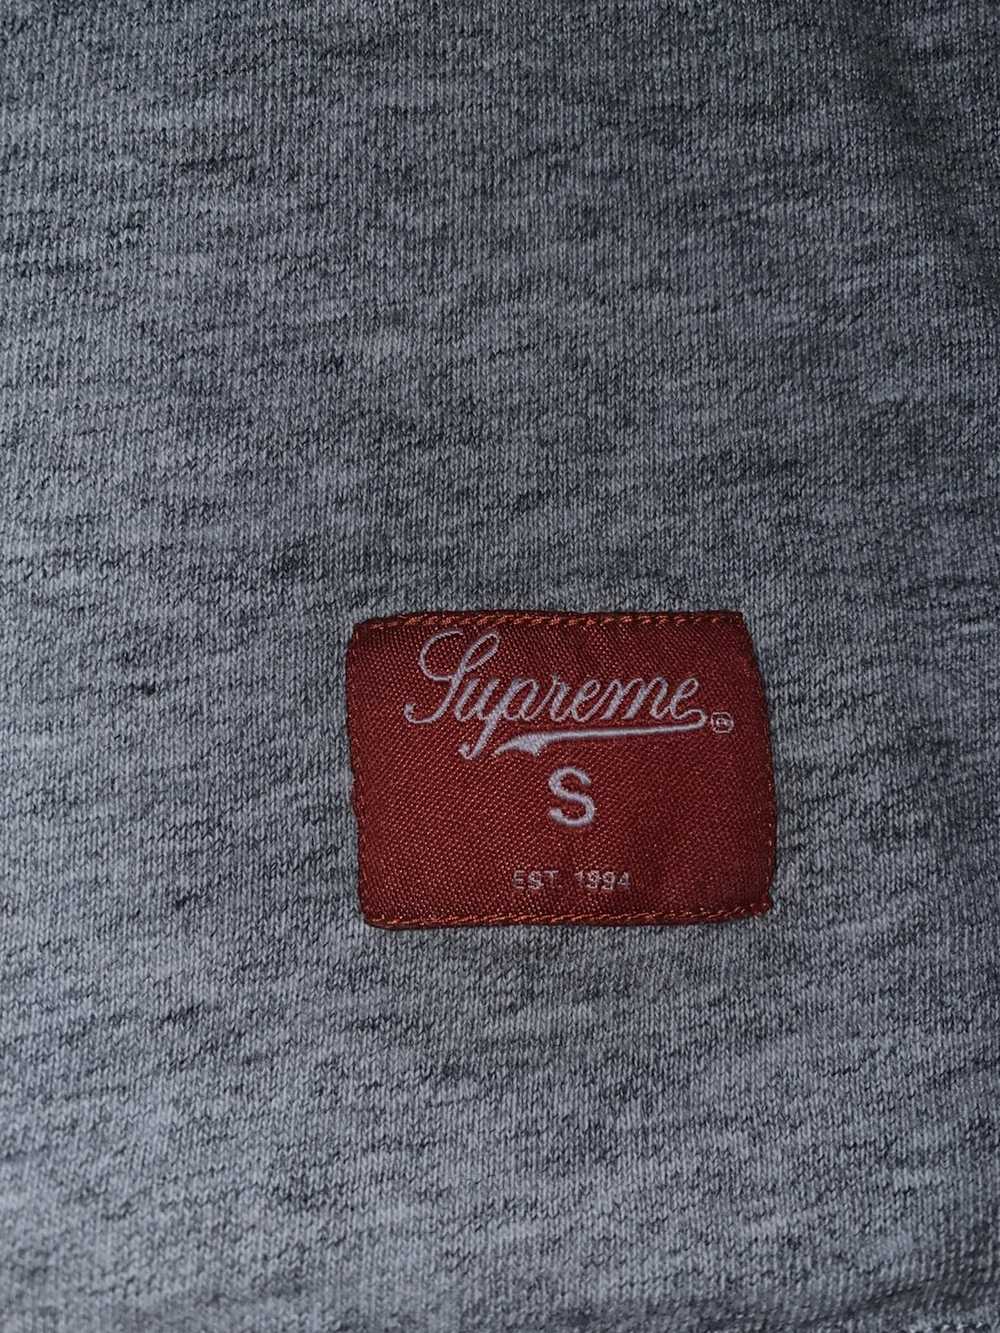 Supreme Vintage 90s Supreme 11 Sweatshirt Jersey - image 3